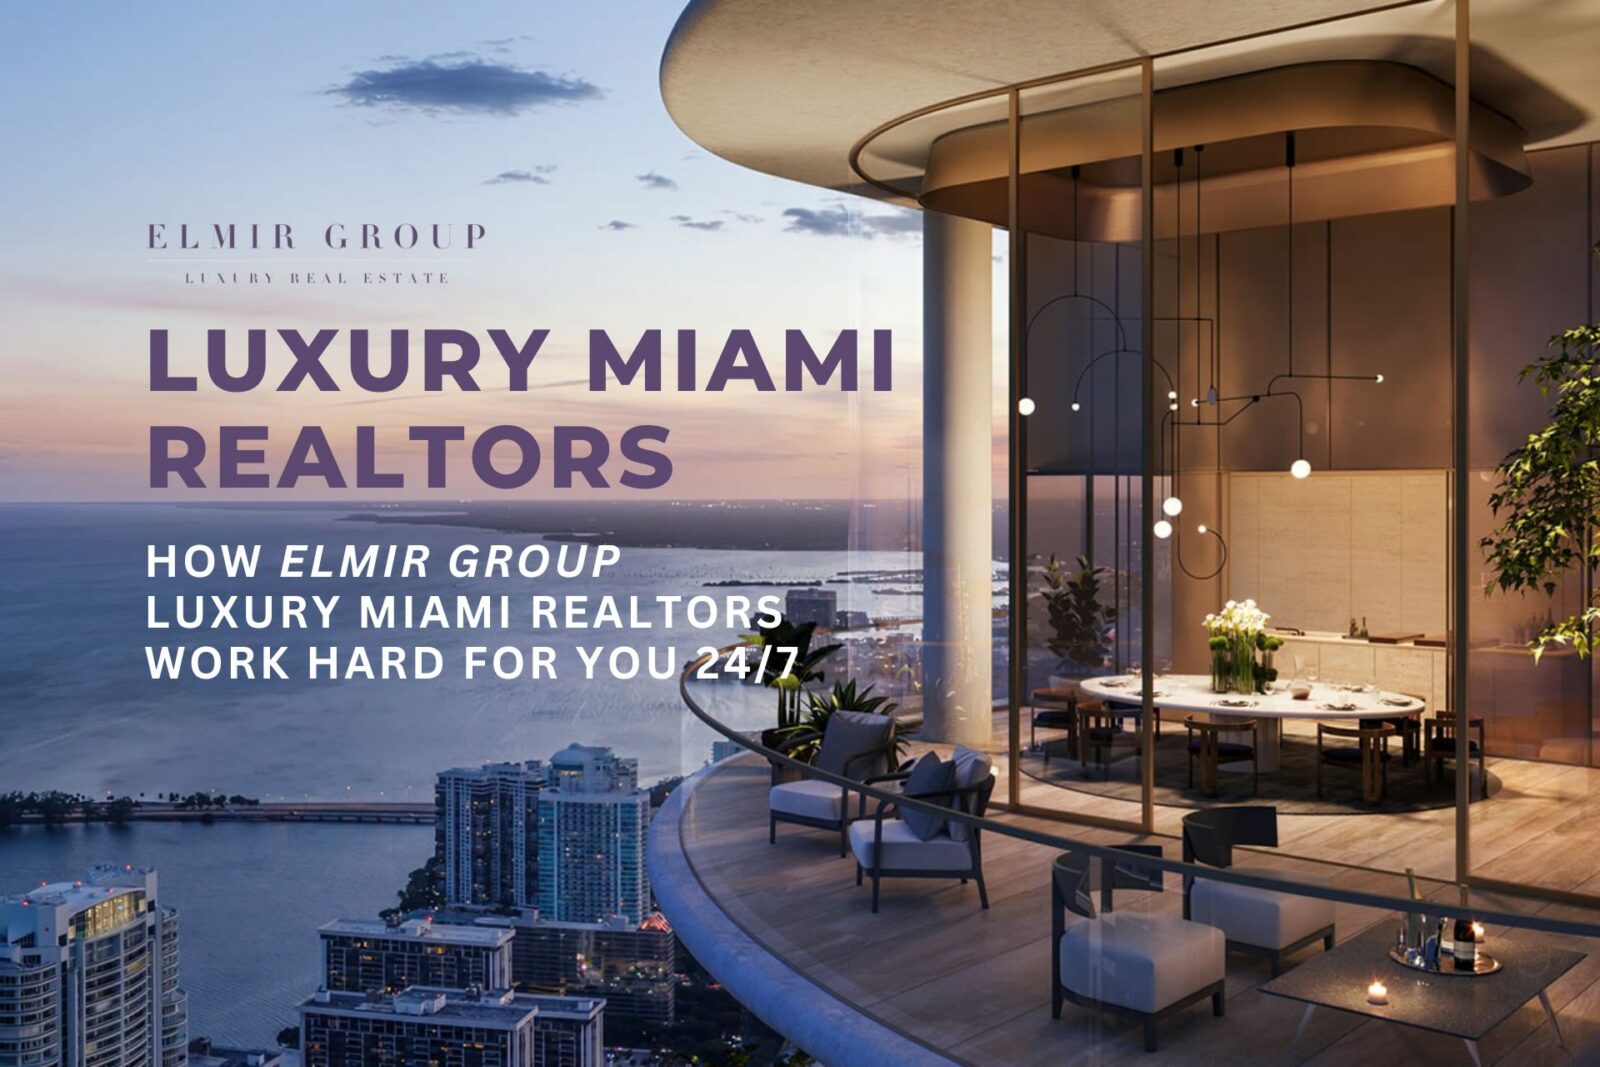 How Elmir Group Luxury Miami Realtors Work Hard for You 24/7